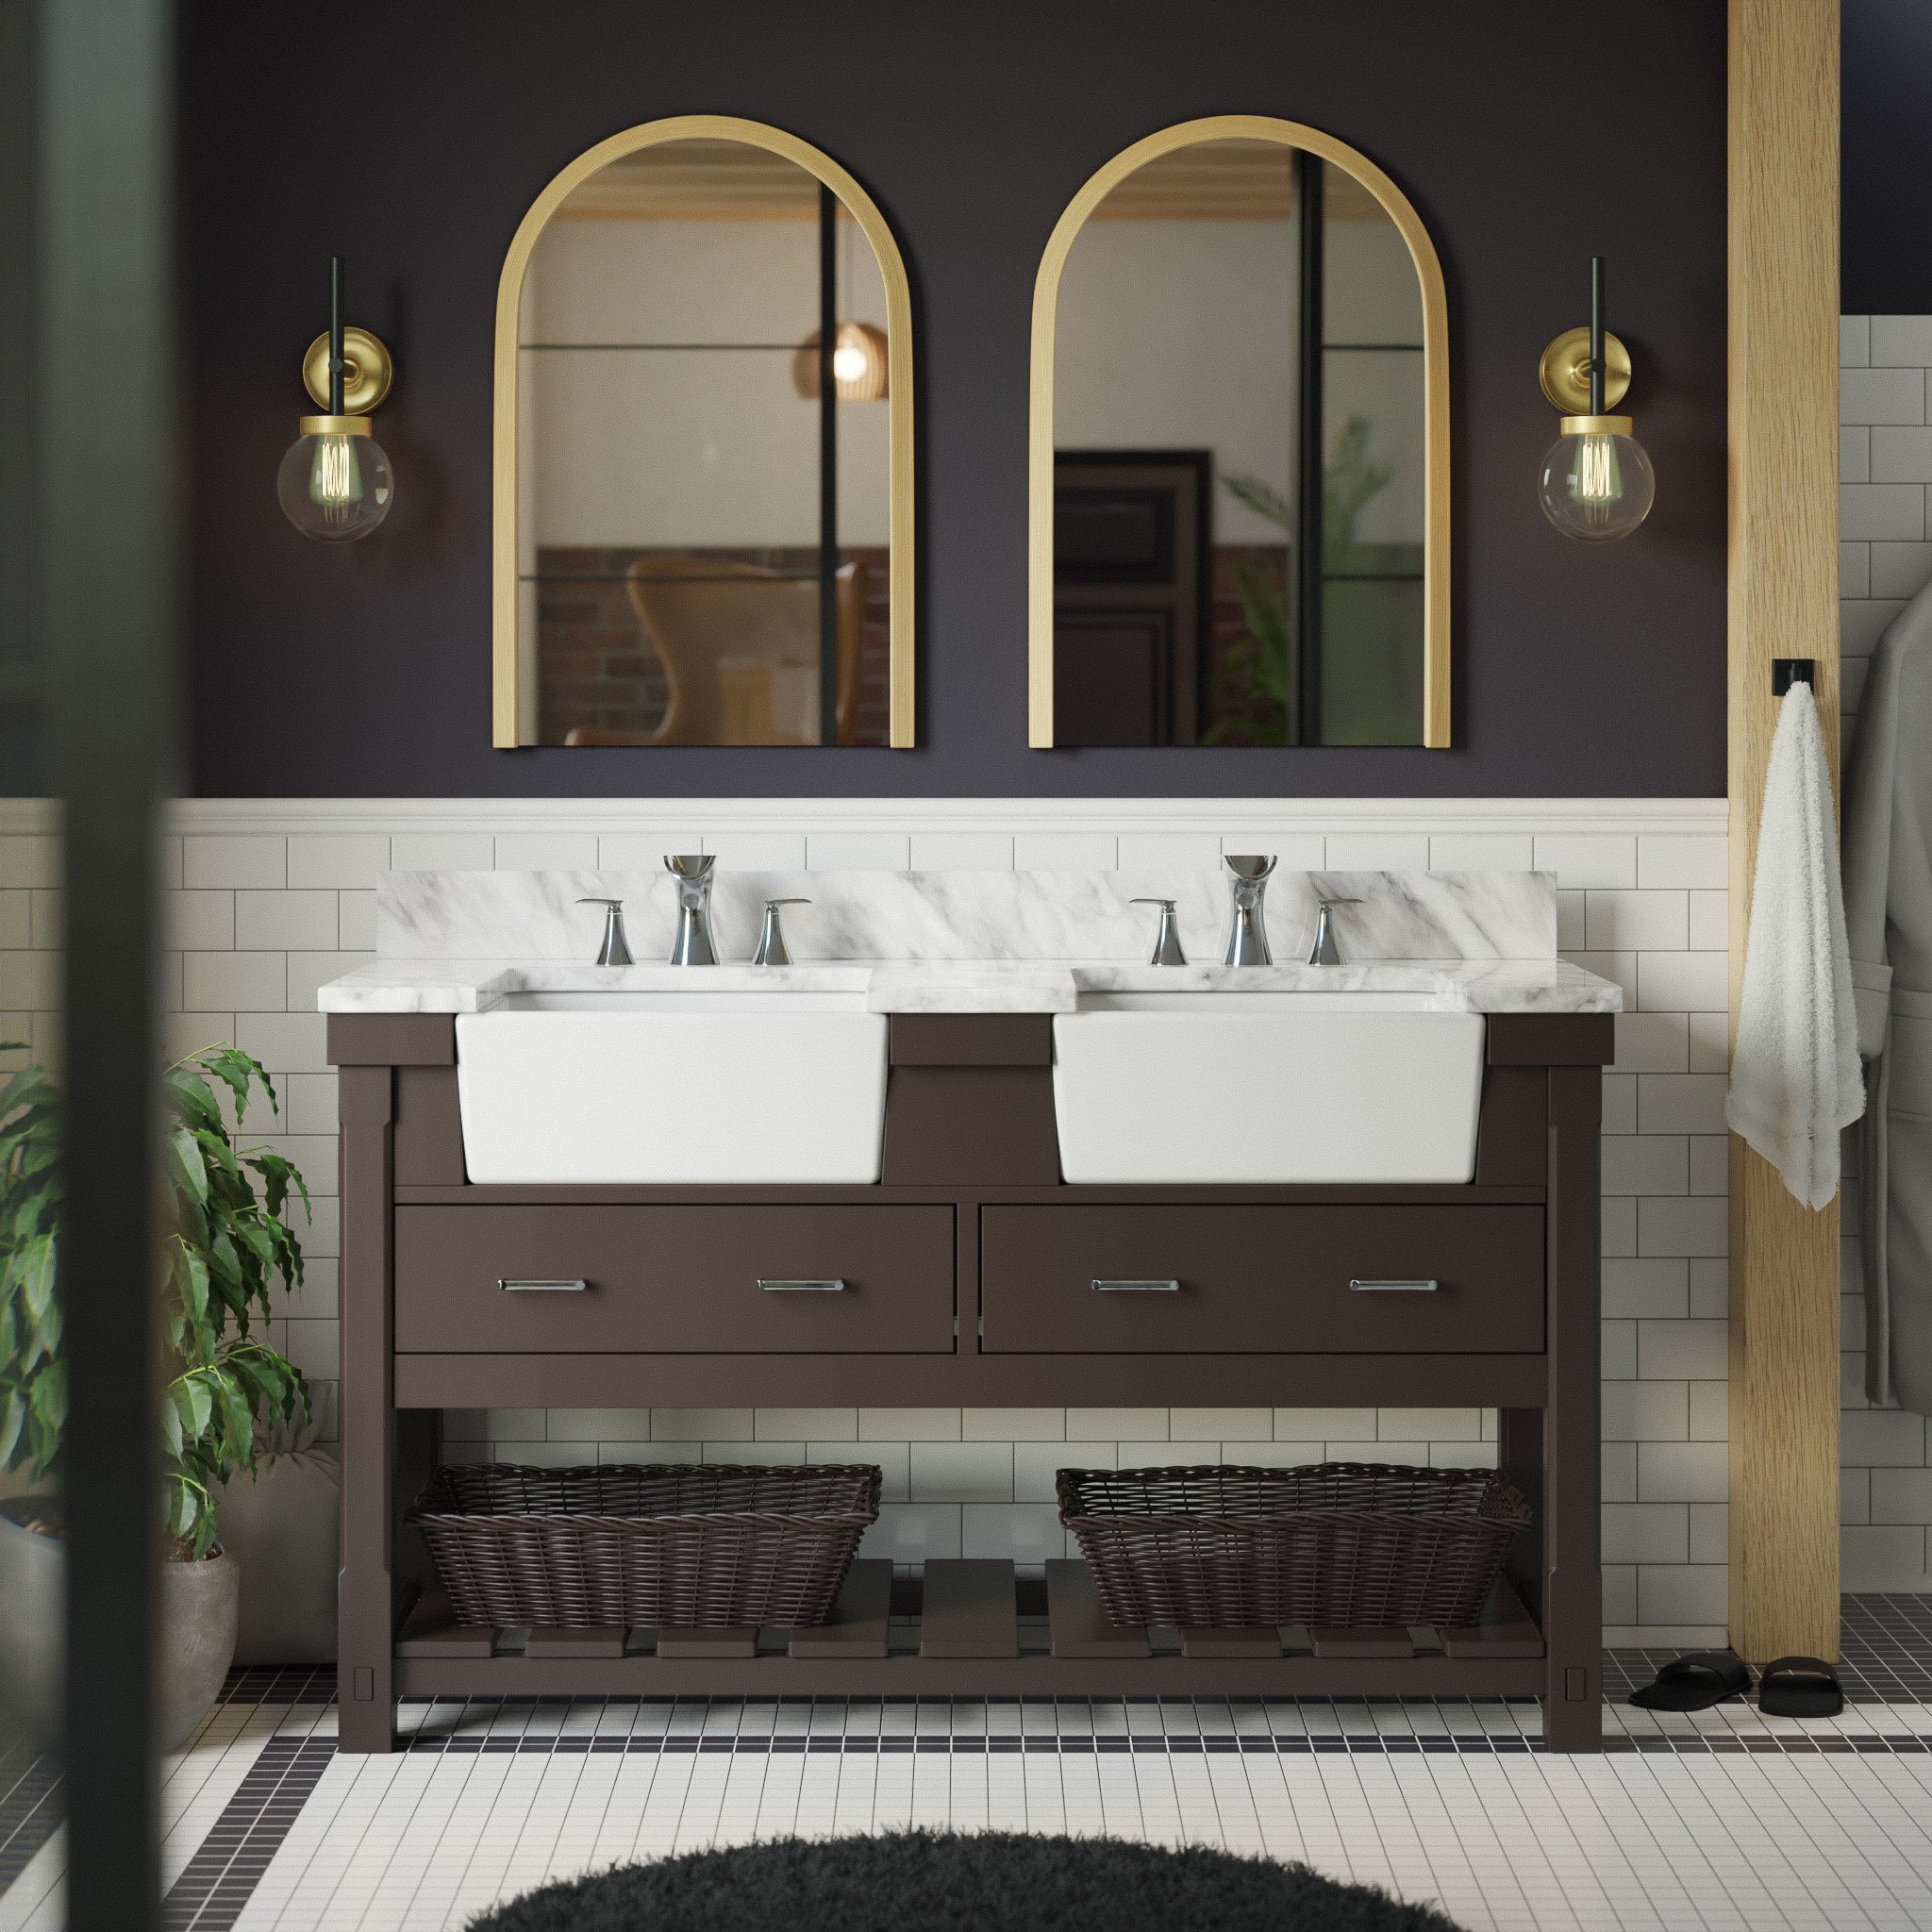 White Cabinet with Soft Close Drawers Charlotte 36-inch Bathroom Vanity : Includes a White Quartz Countertop Quartz/White and White Ceramic Farmhouse Apron Sink